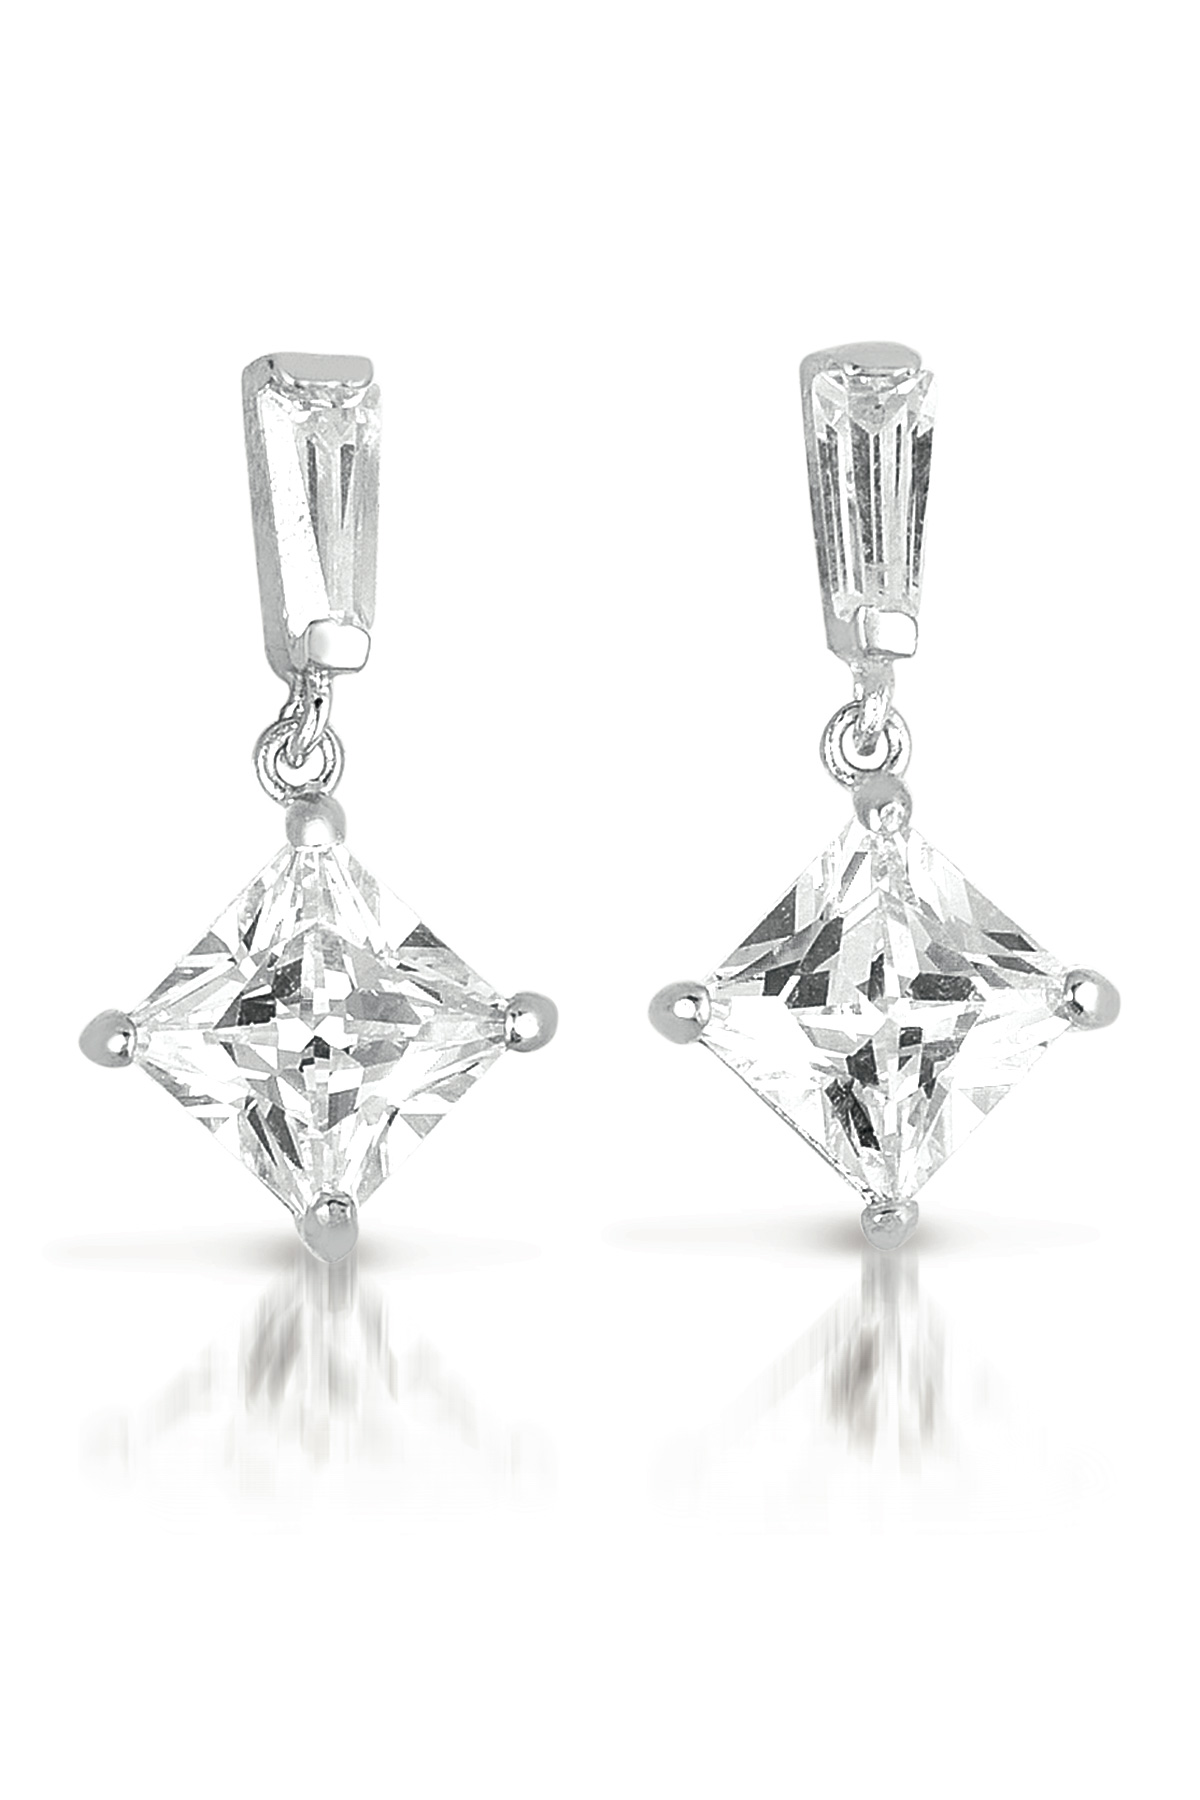 Cubic Zirconia (.925) Sterling Silver Sterling Silver Rhodium Plated Diamond Shape Drop Earrings